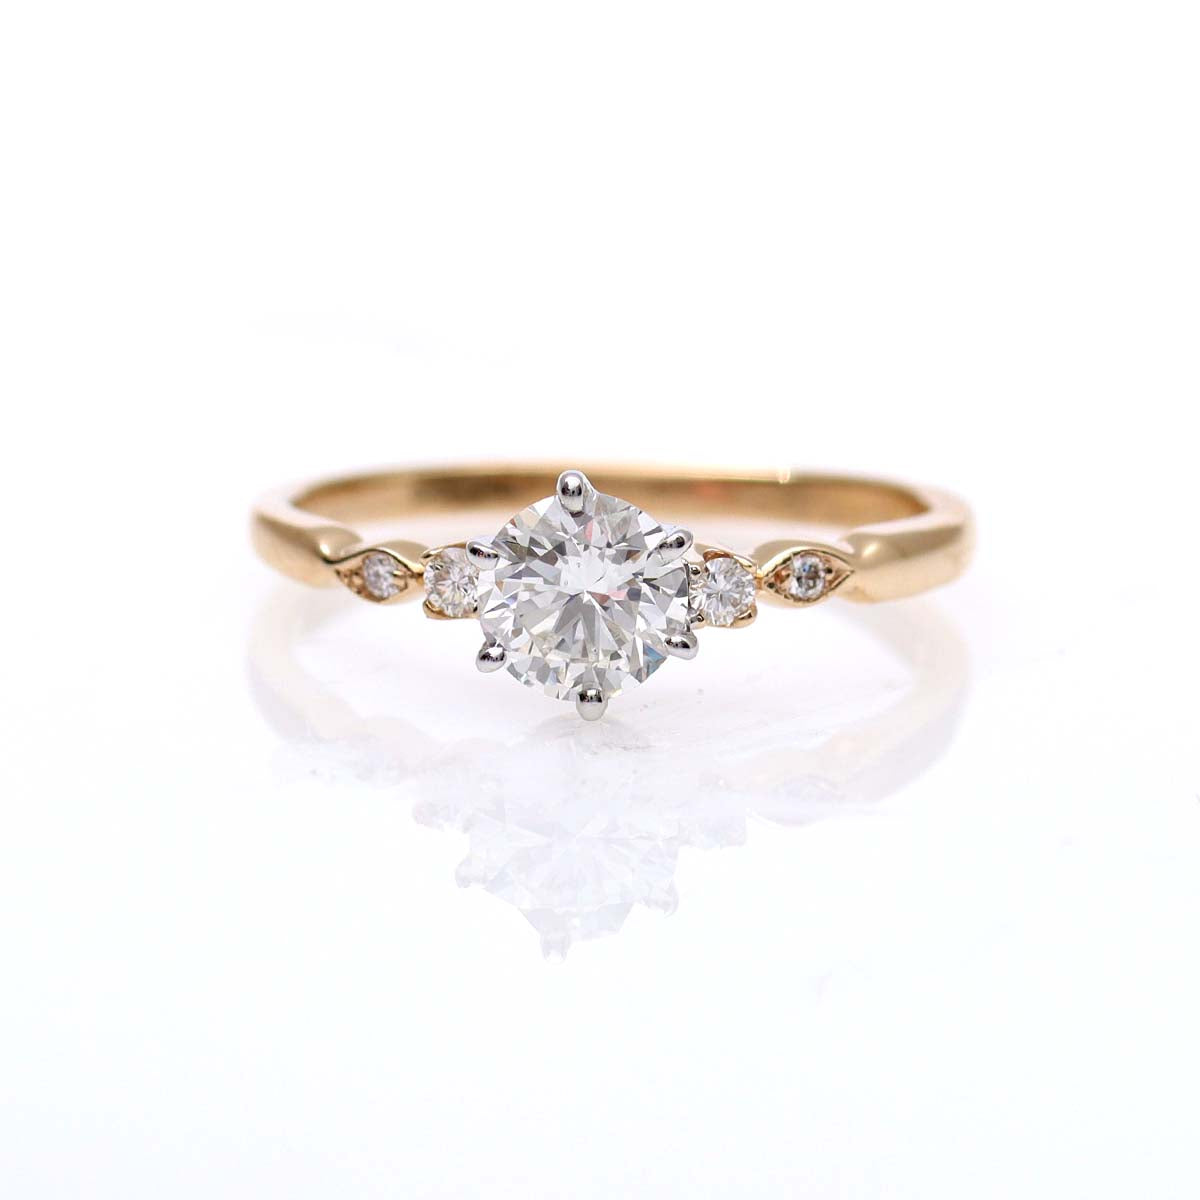 The Cordelia Replica Art Deco Engagement Ring #3510-3